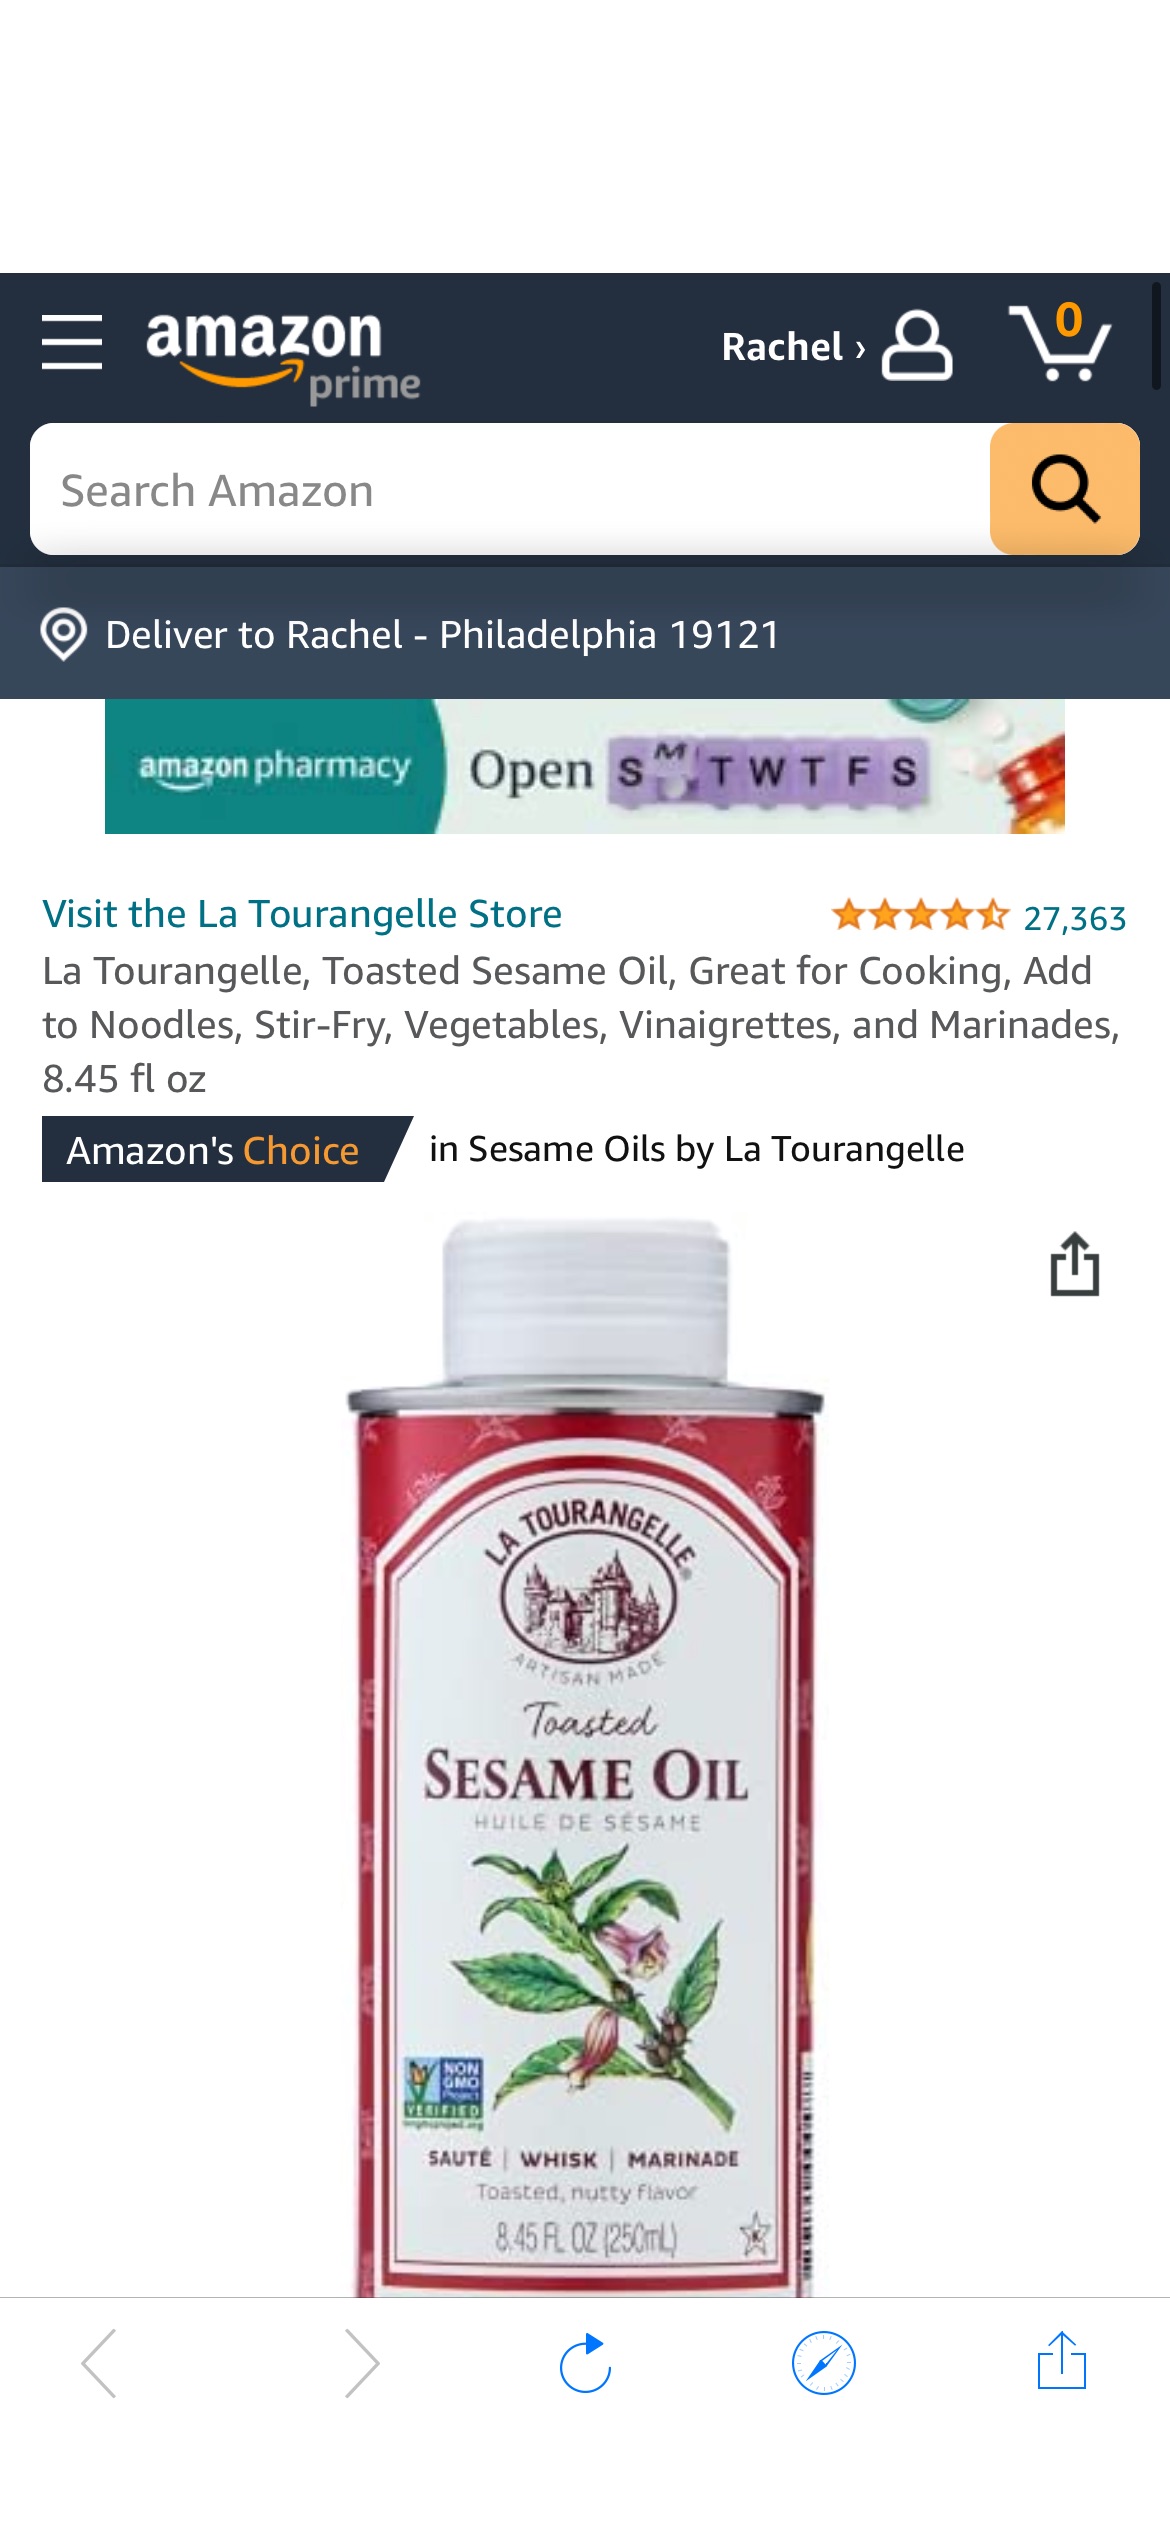 Amazon.com: La Tourangelle, Toasted Sesame Oil, Great for Cooking, Add to Noodles, Stir-Fry, Vegetables, Vinaigrettes, and Marinades, 8.45 fl oz